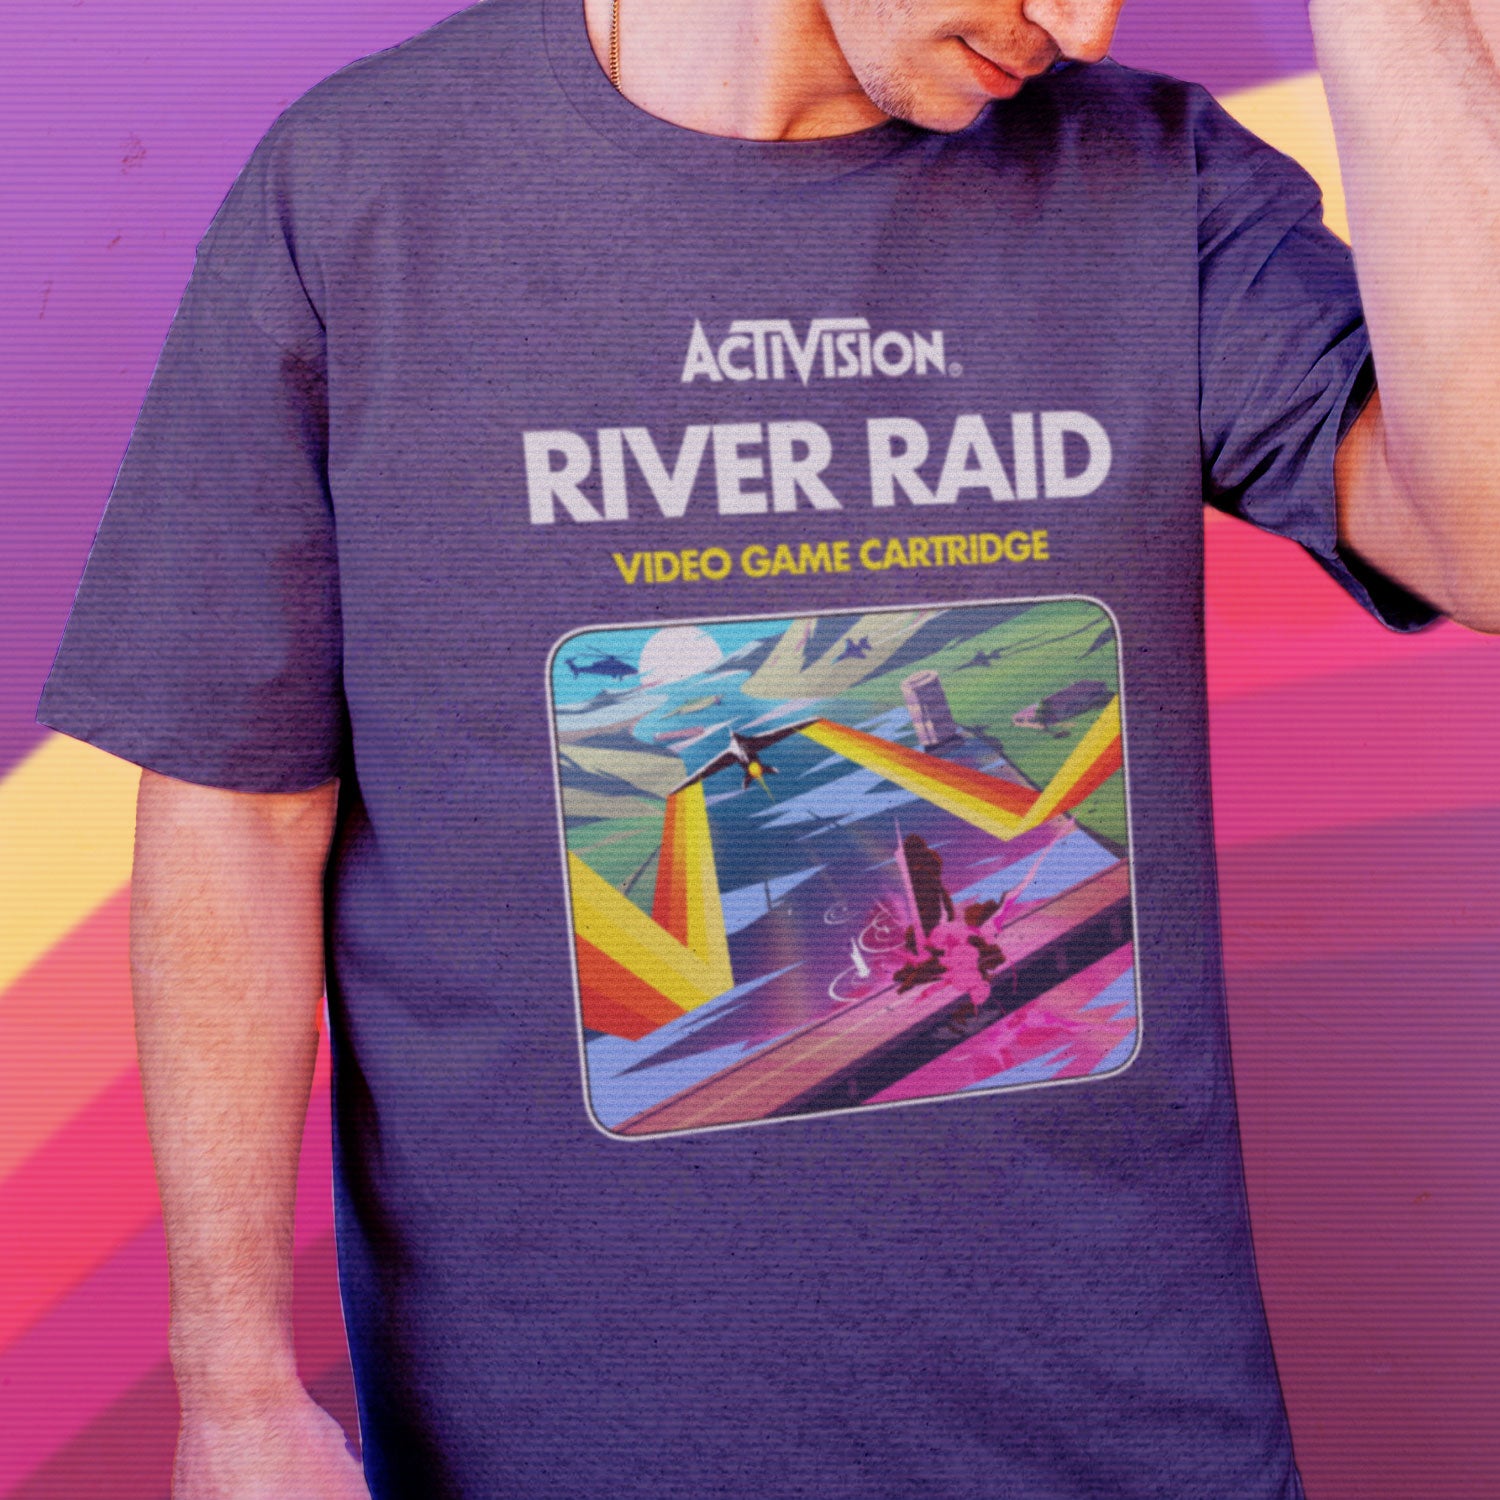 River Raid Men's T-Shirt, Activision Cartridge Artwork on Loose Fit Purple Tee